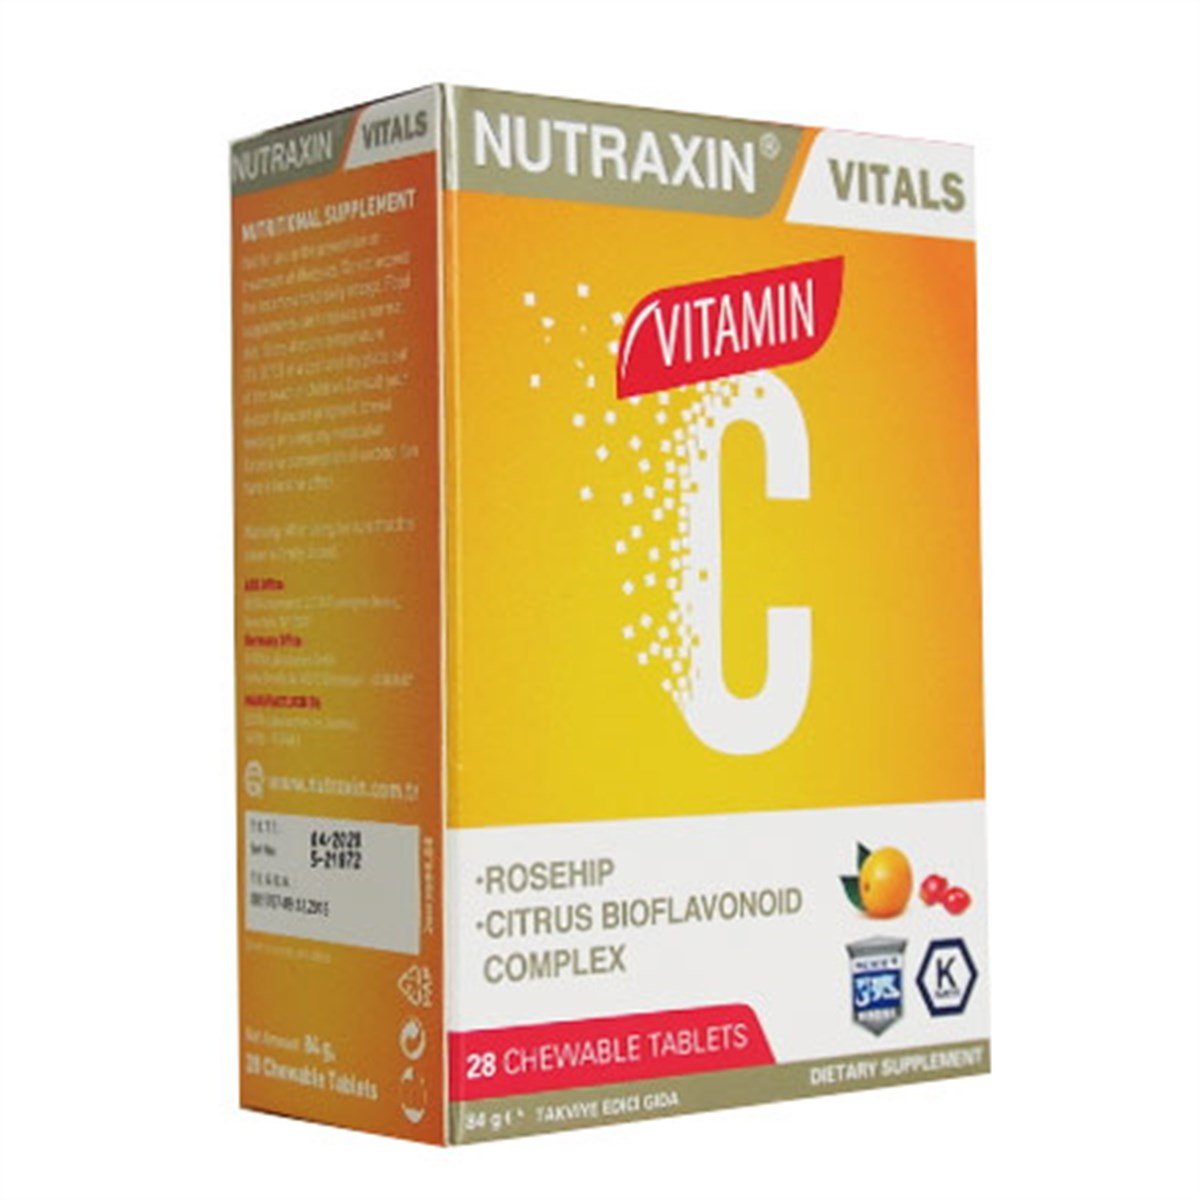 NUTRAXIN Vitals Vitamin C 28 Chewable Tablets | Farma Ucuz